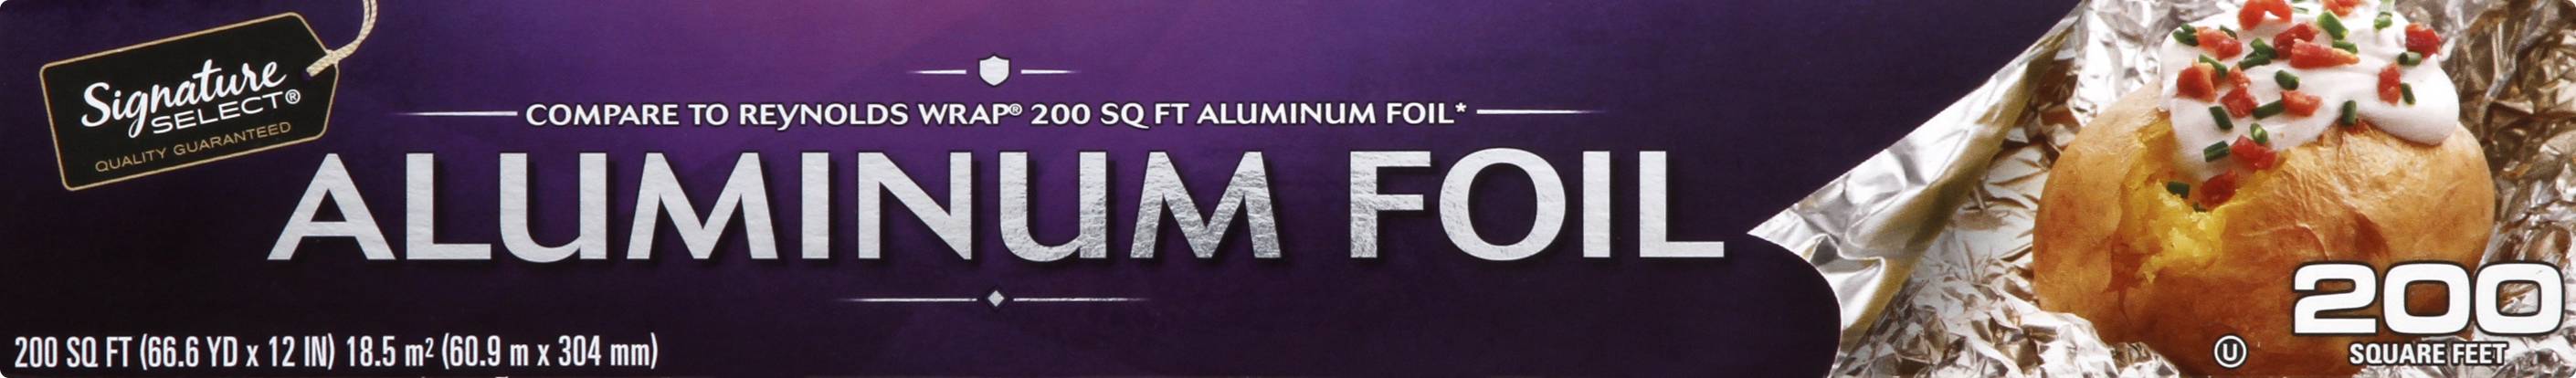 Signature Select Aluminum Foil 200 (1 ct)